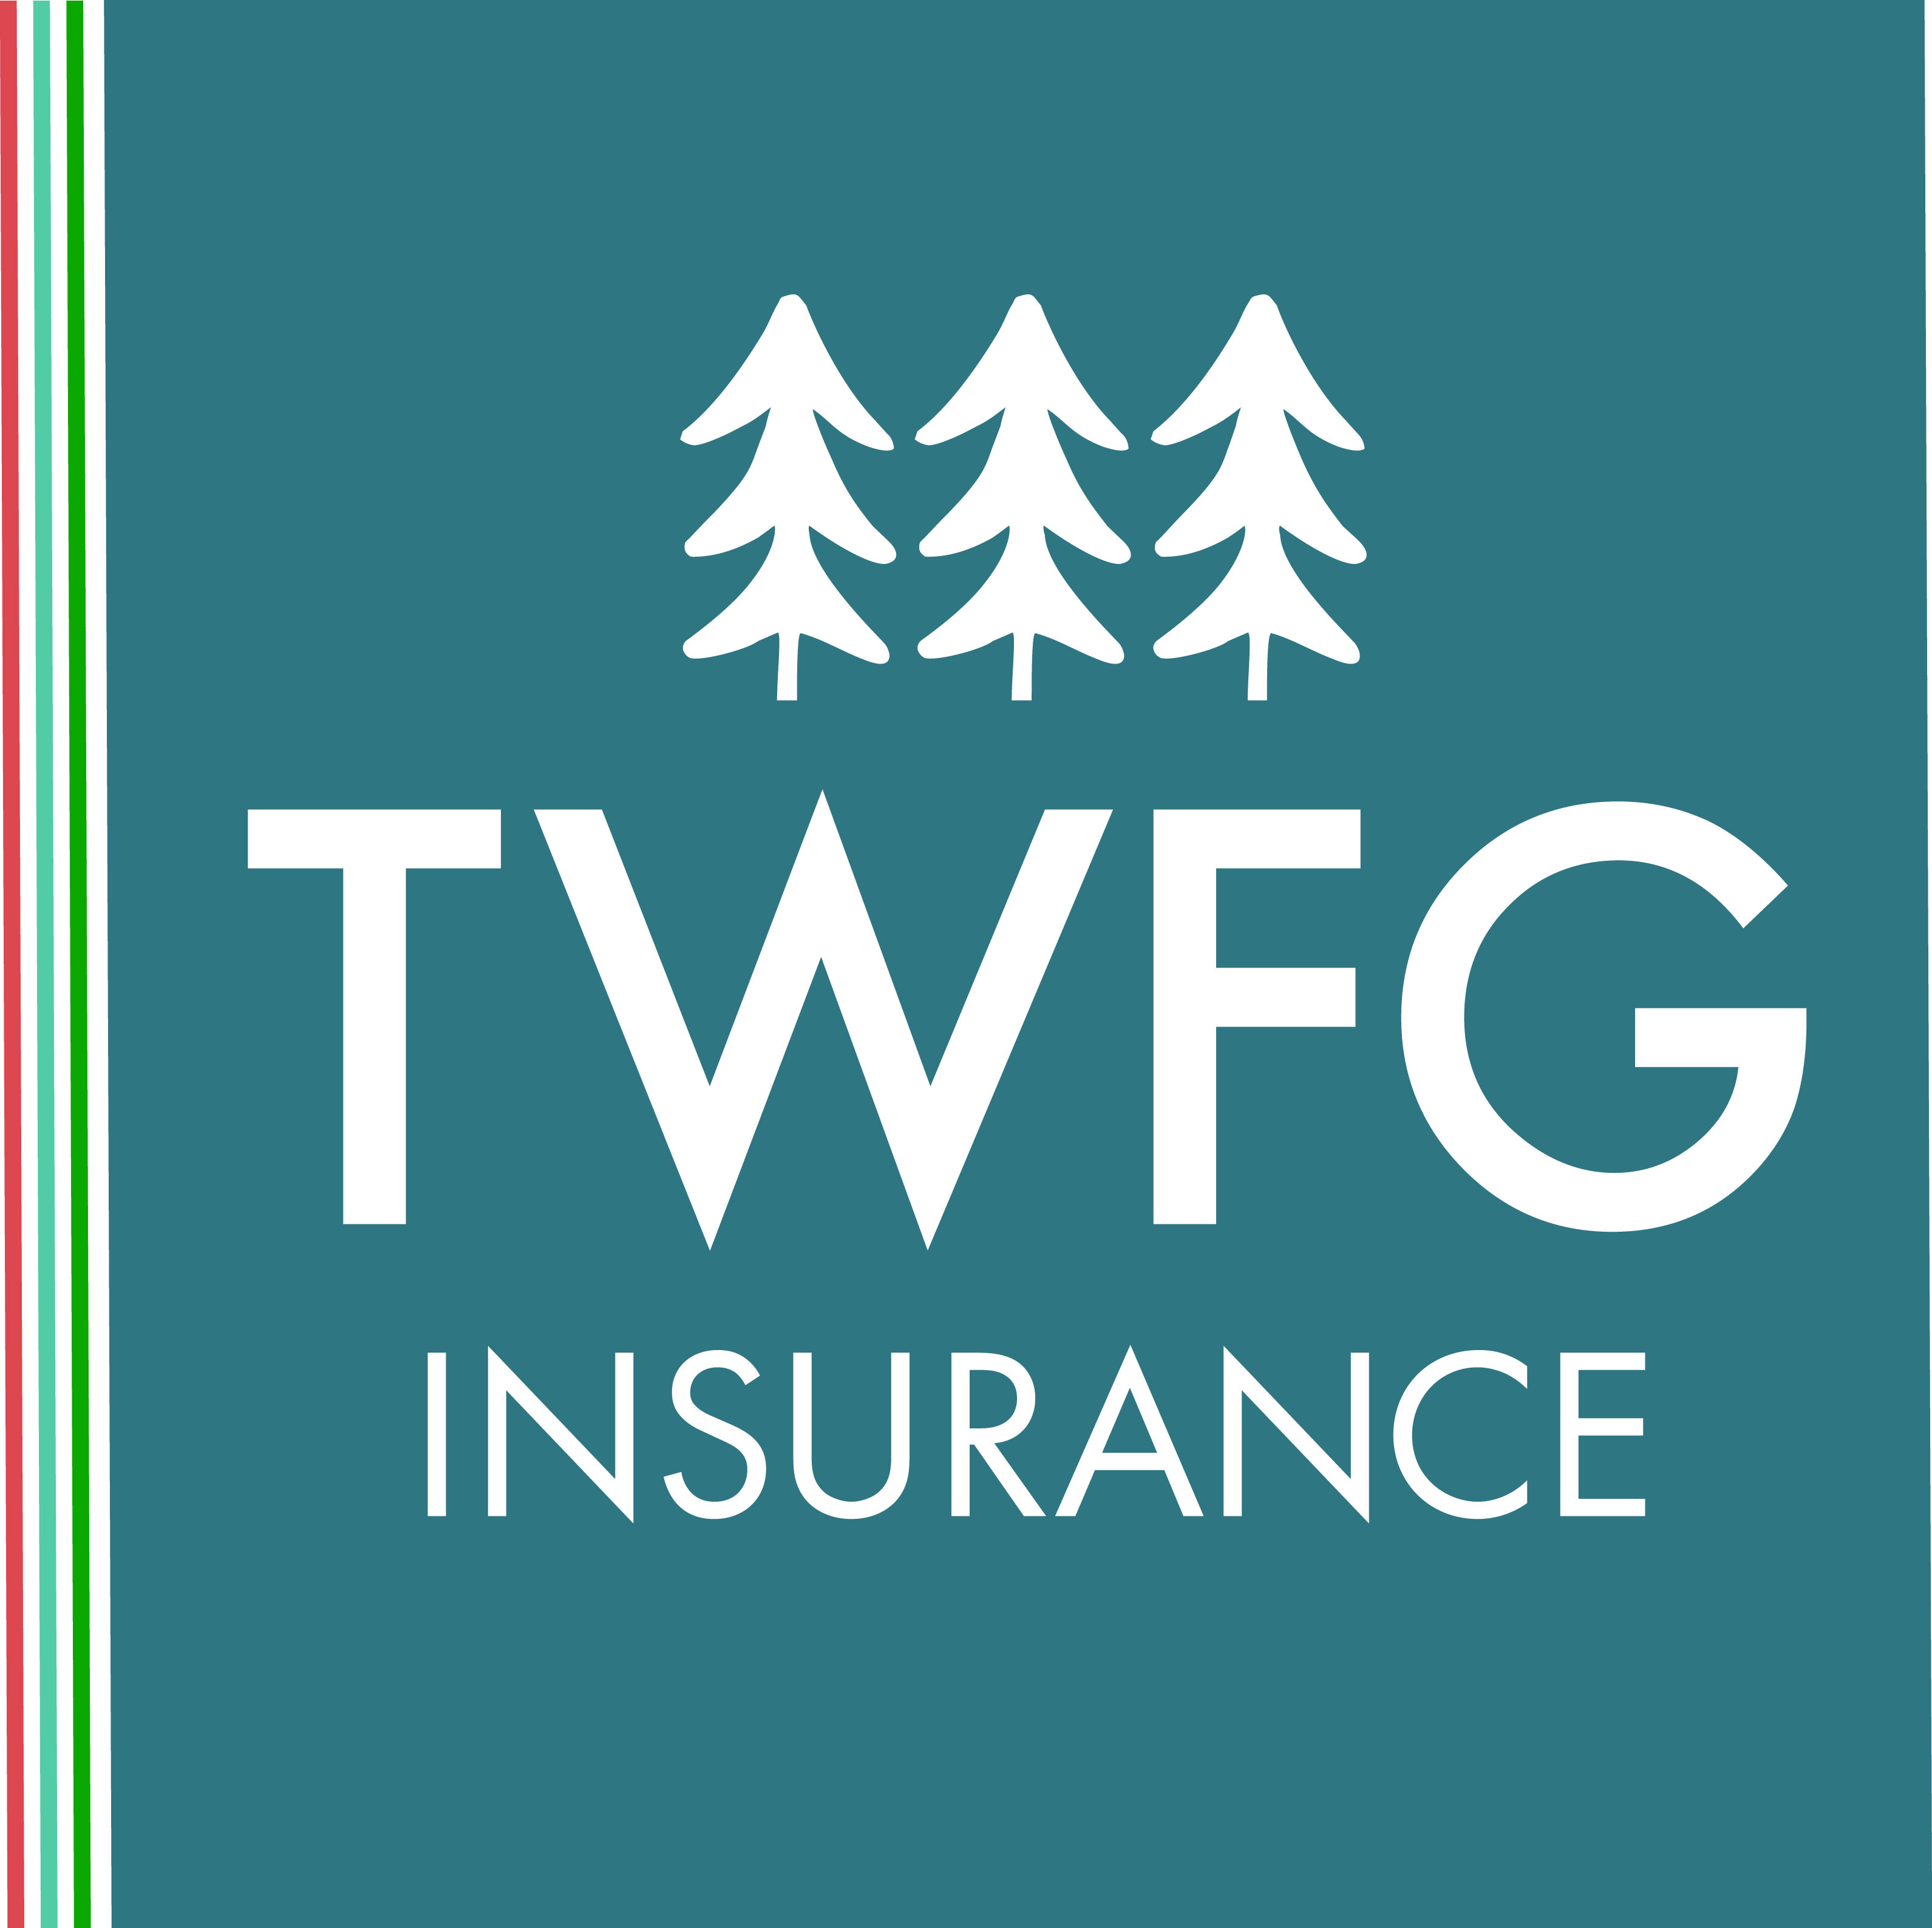 TWFG Insurance Services logo